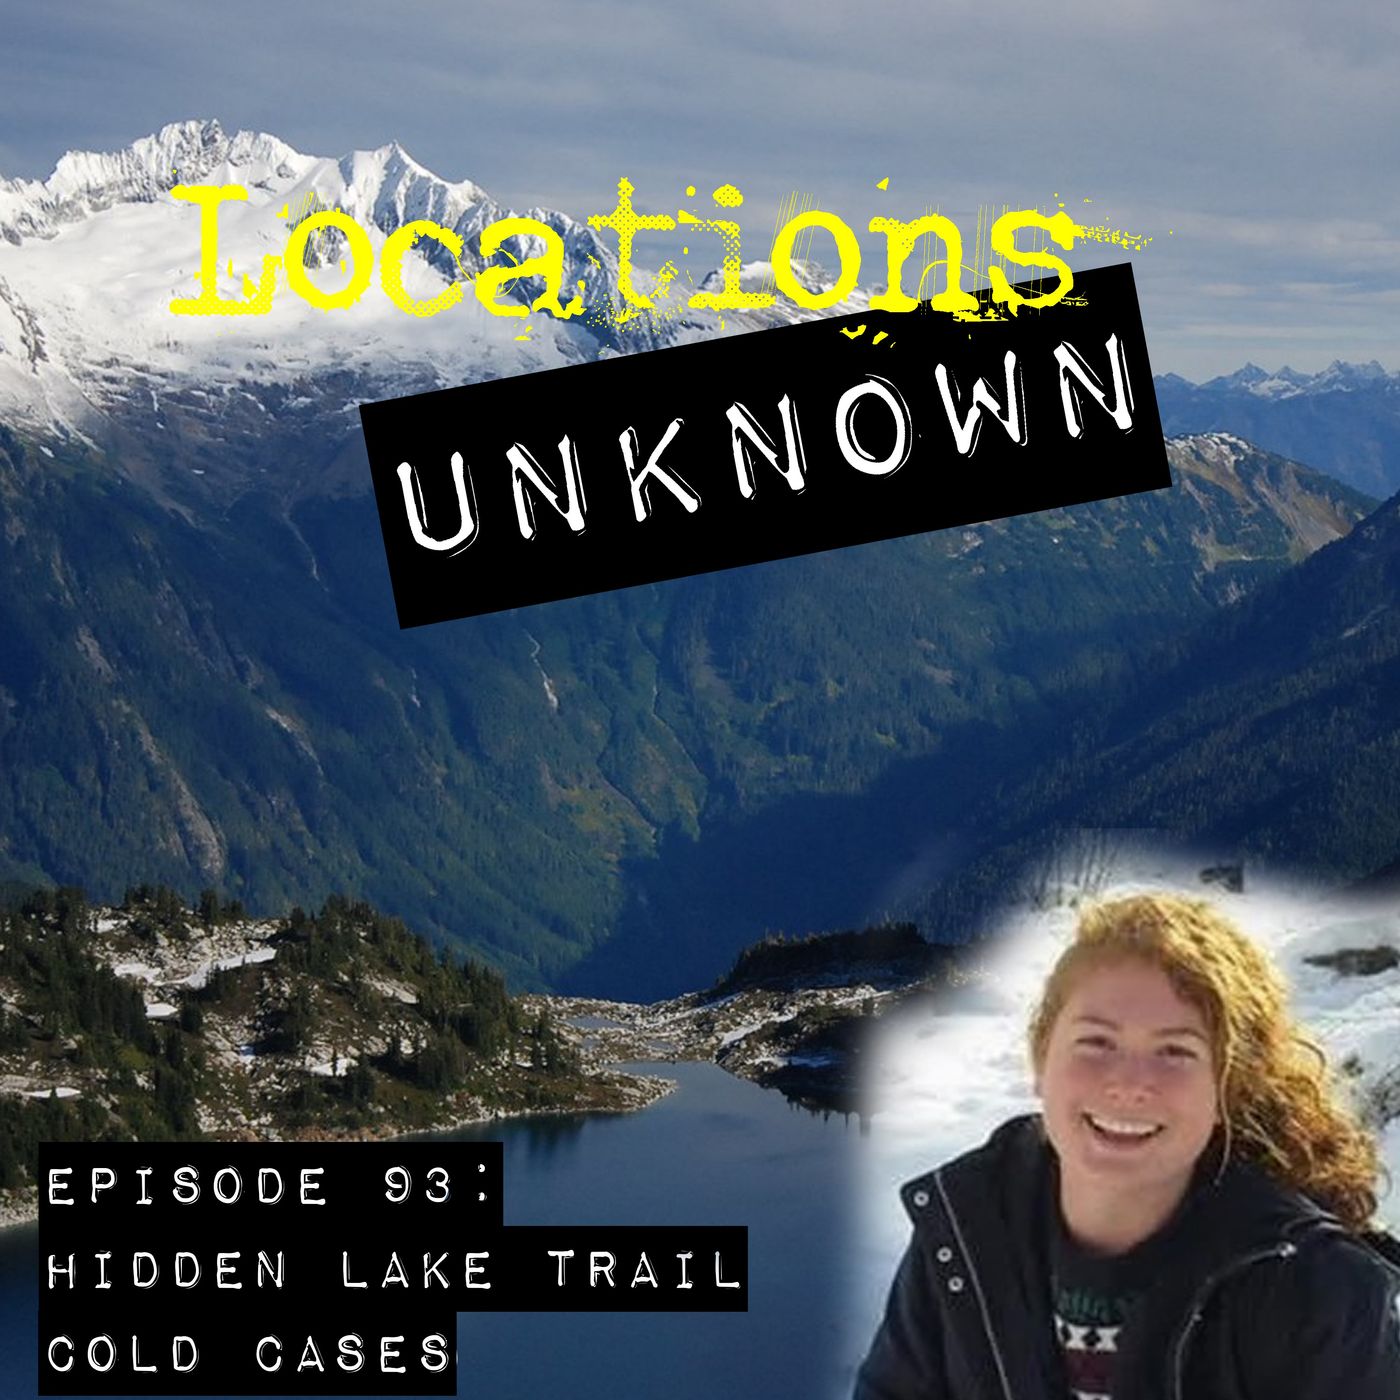 EP. #93: Mystery on the Hidden Lake Trail - Washington